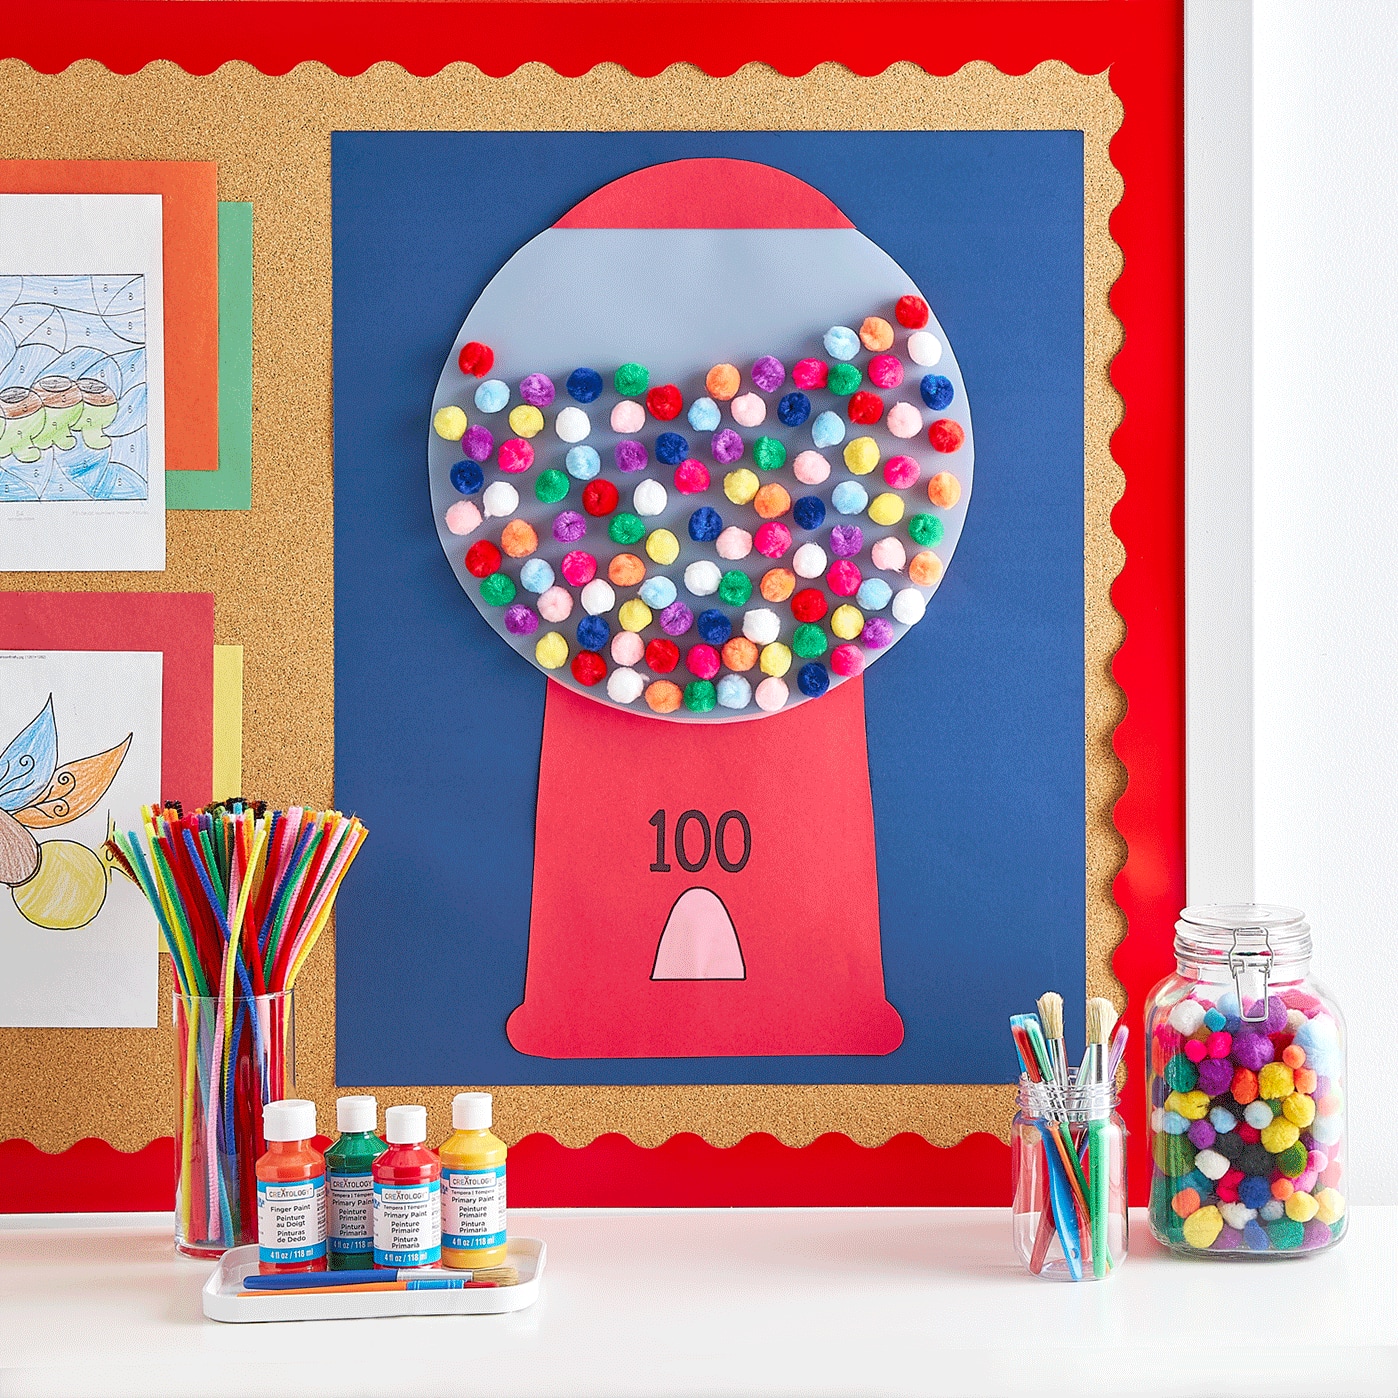 100 days of school bubble gum machine